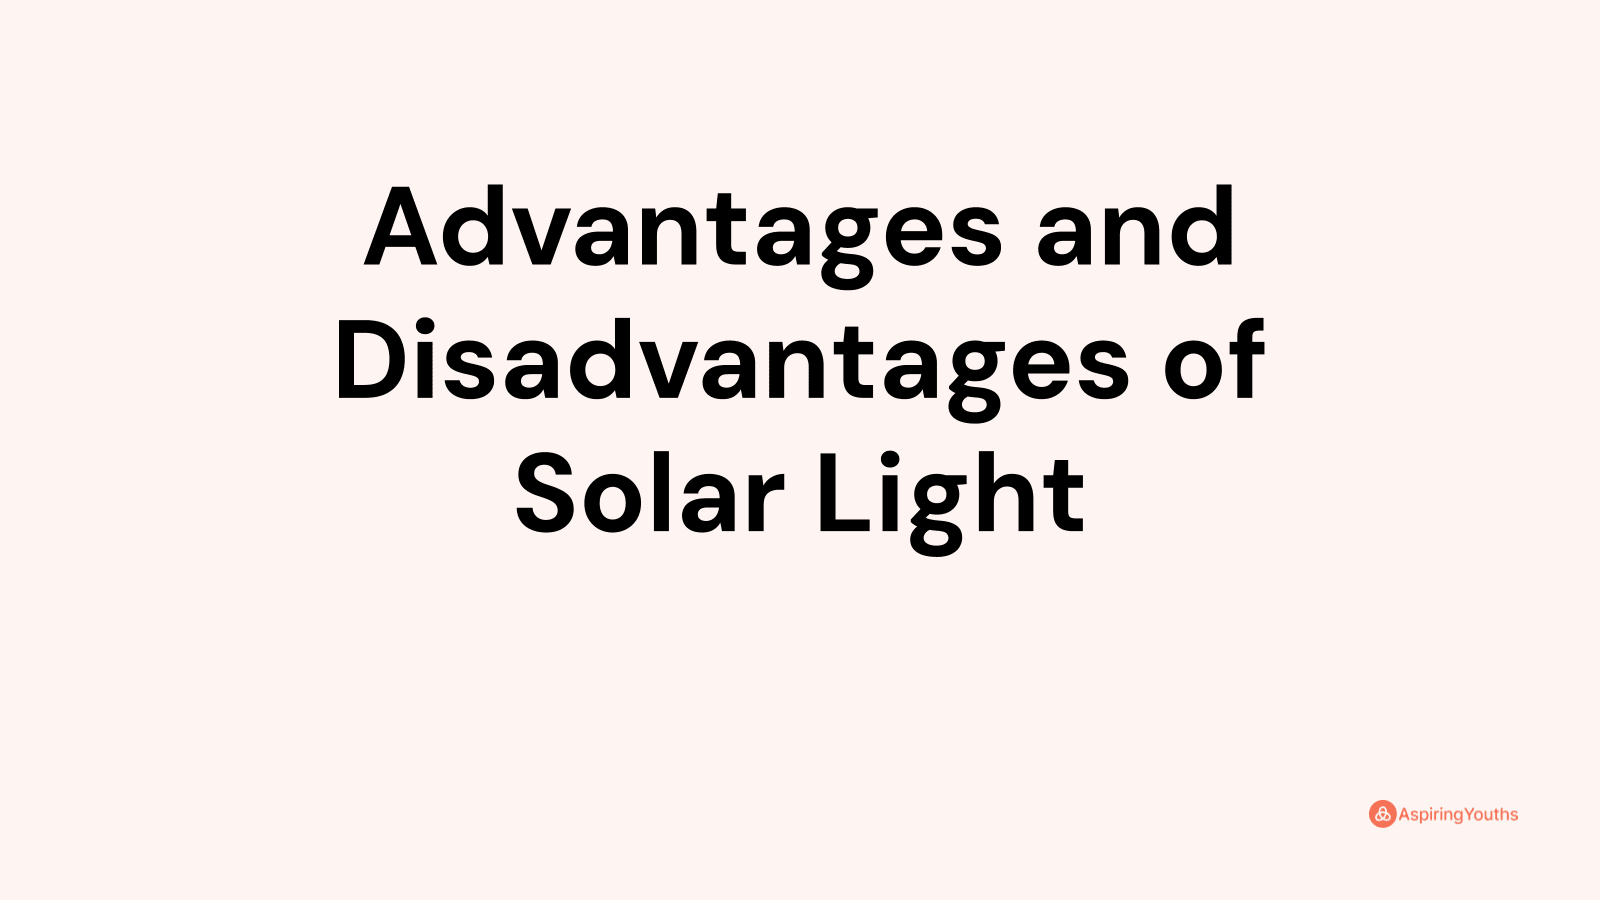 Advantages and disadvantages of Solar Light